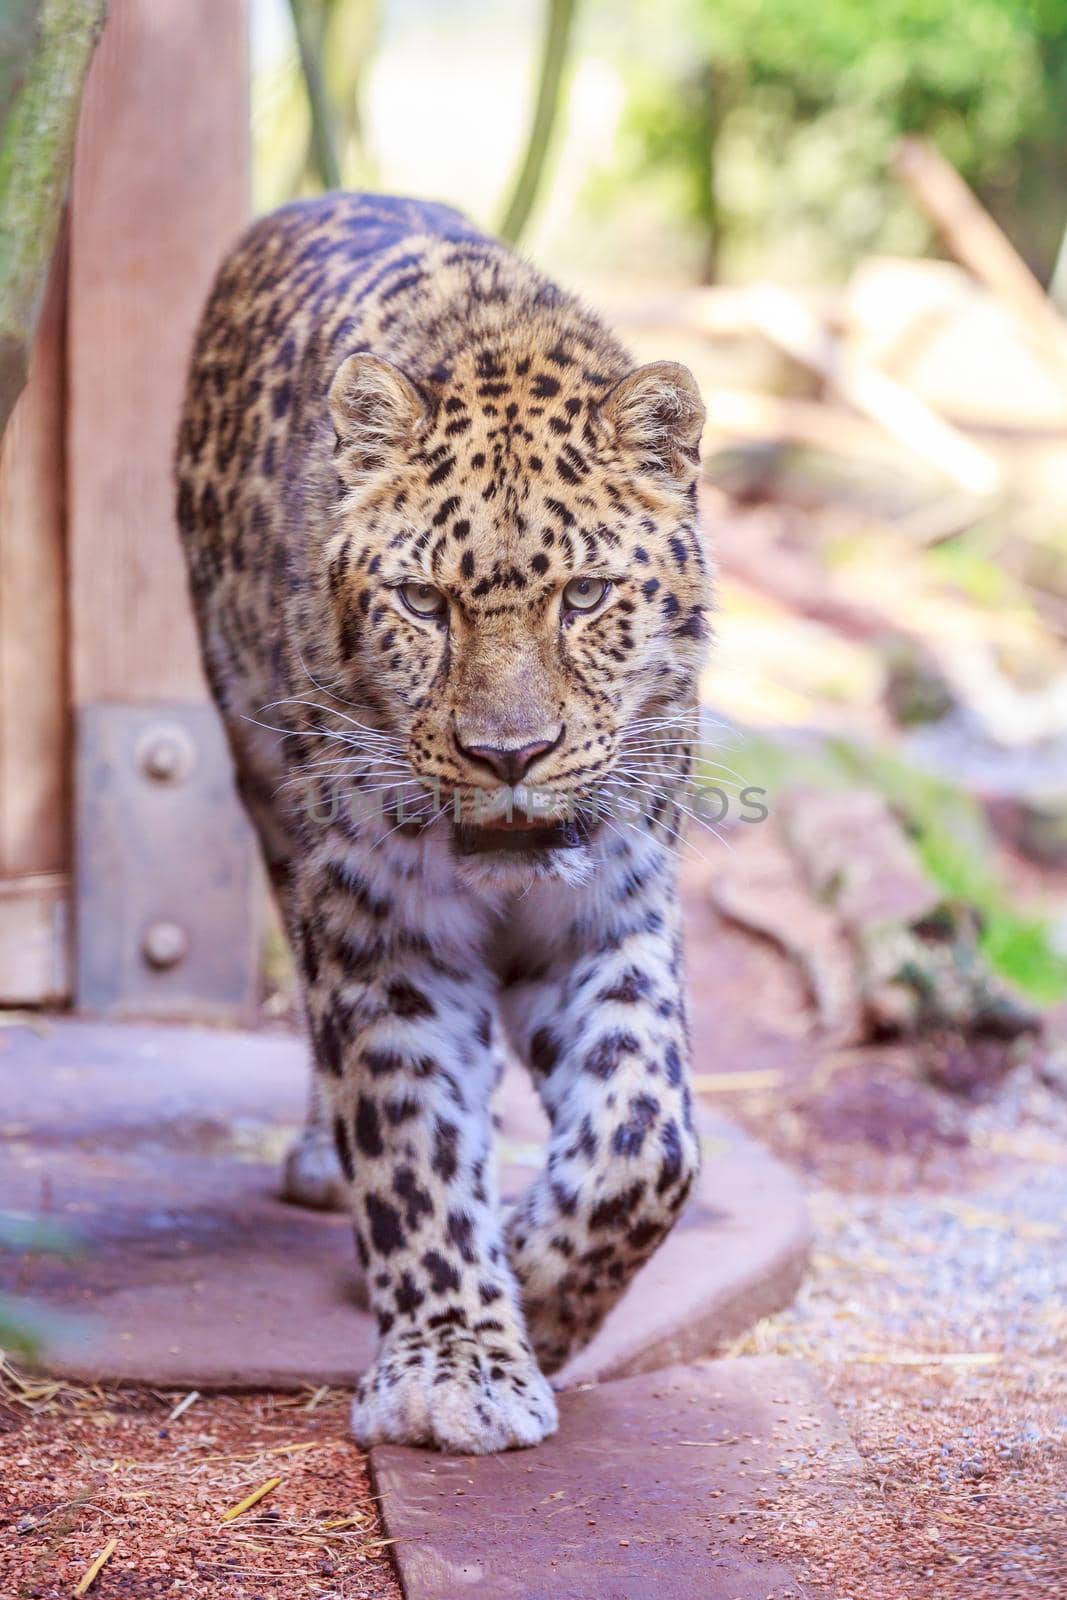 The beautiful Amur Leopard walking towards the camera.